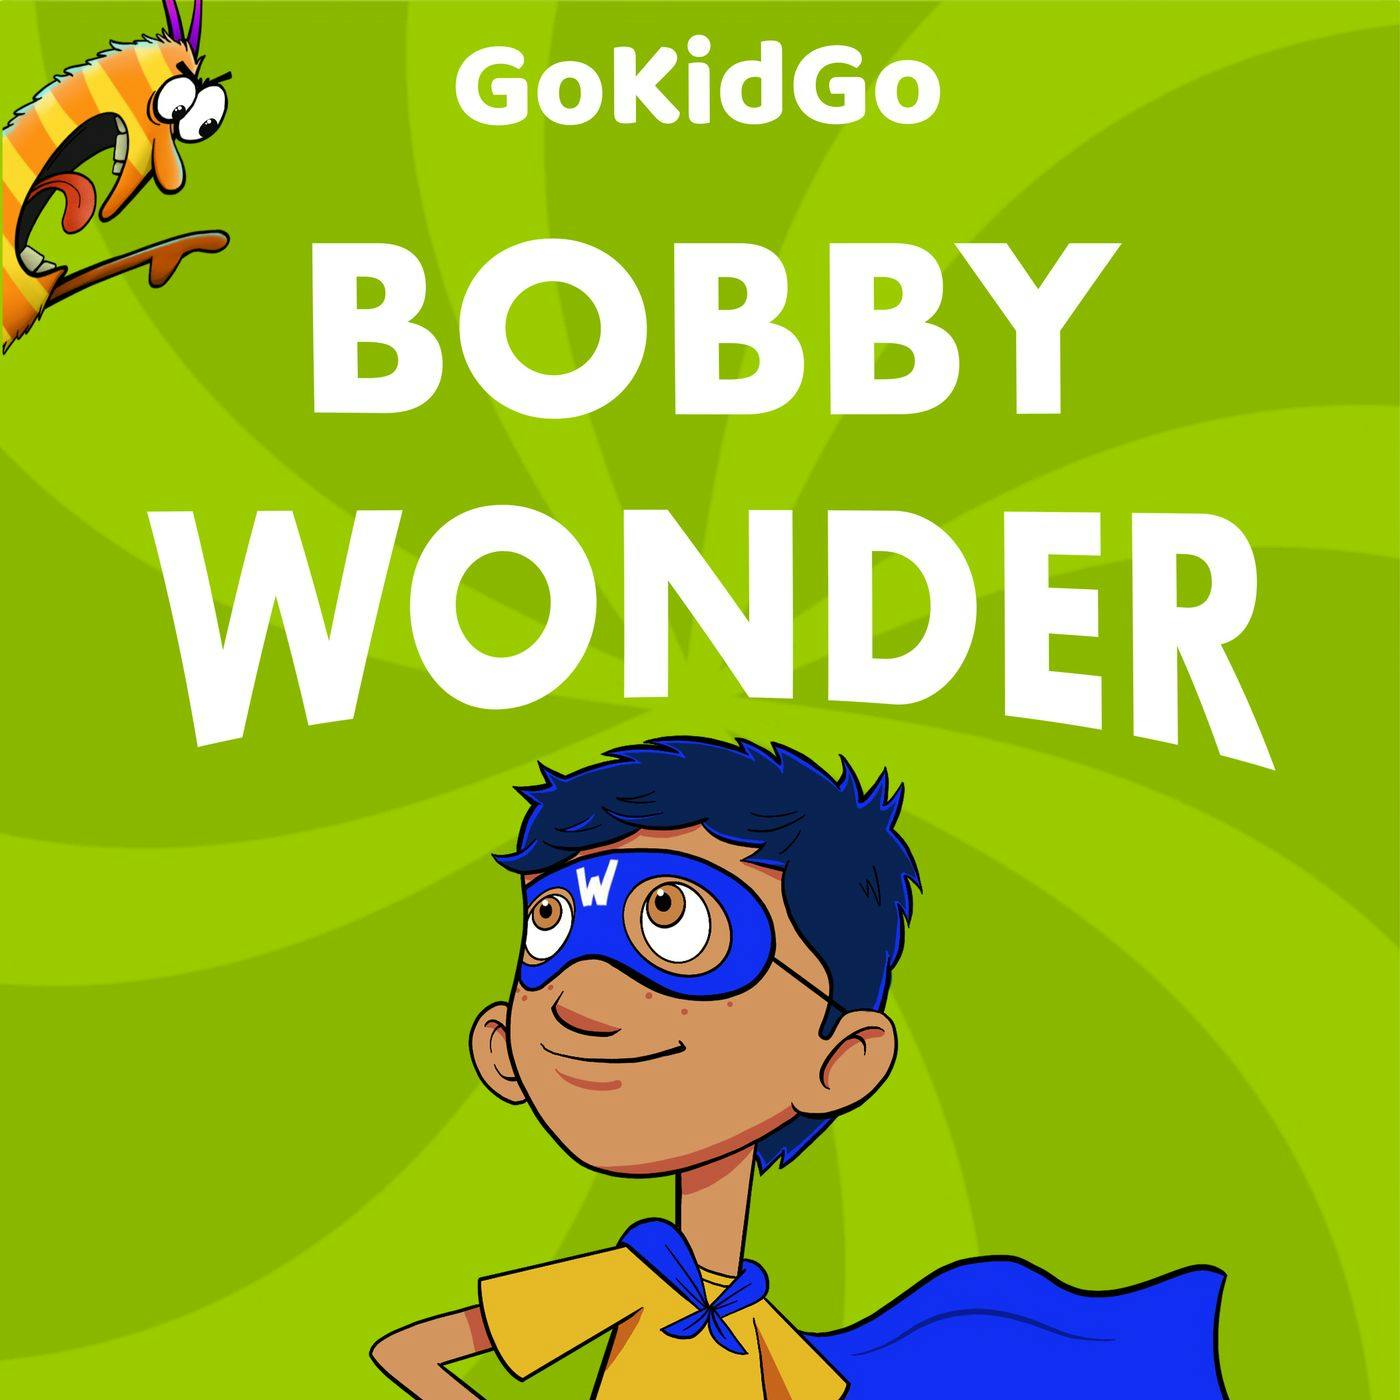 S1E4 - Bobby Wonder: Bobby’s Very Bad Day